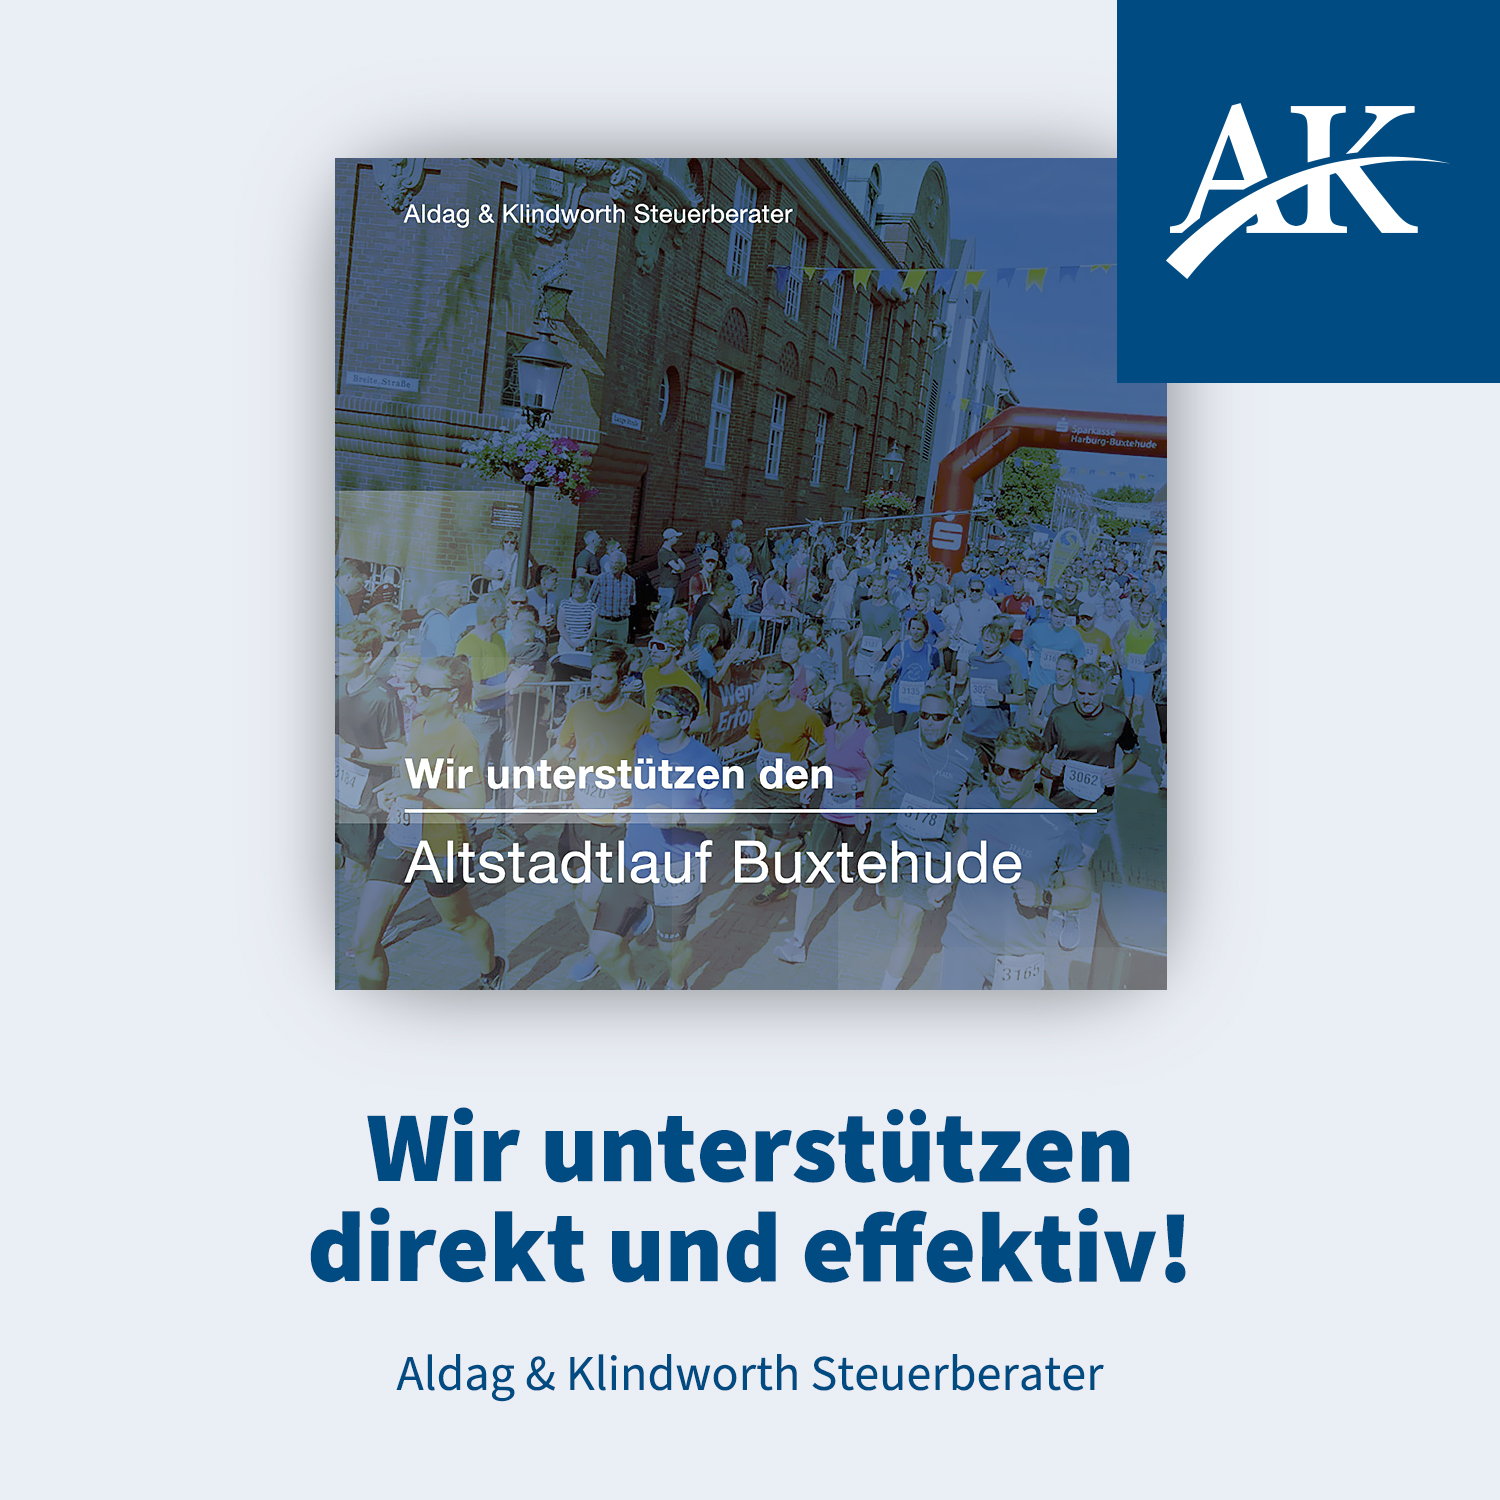 Aldag & Klindworth Steuerberater – Grafikdesign für soziale Medien: Altstadtlauf Buxtehude.